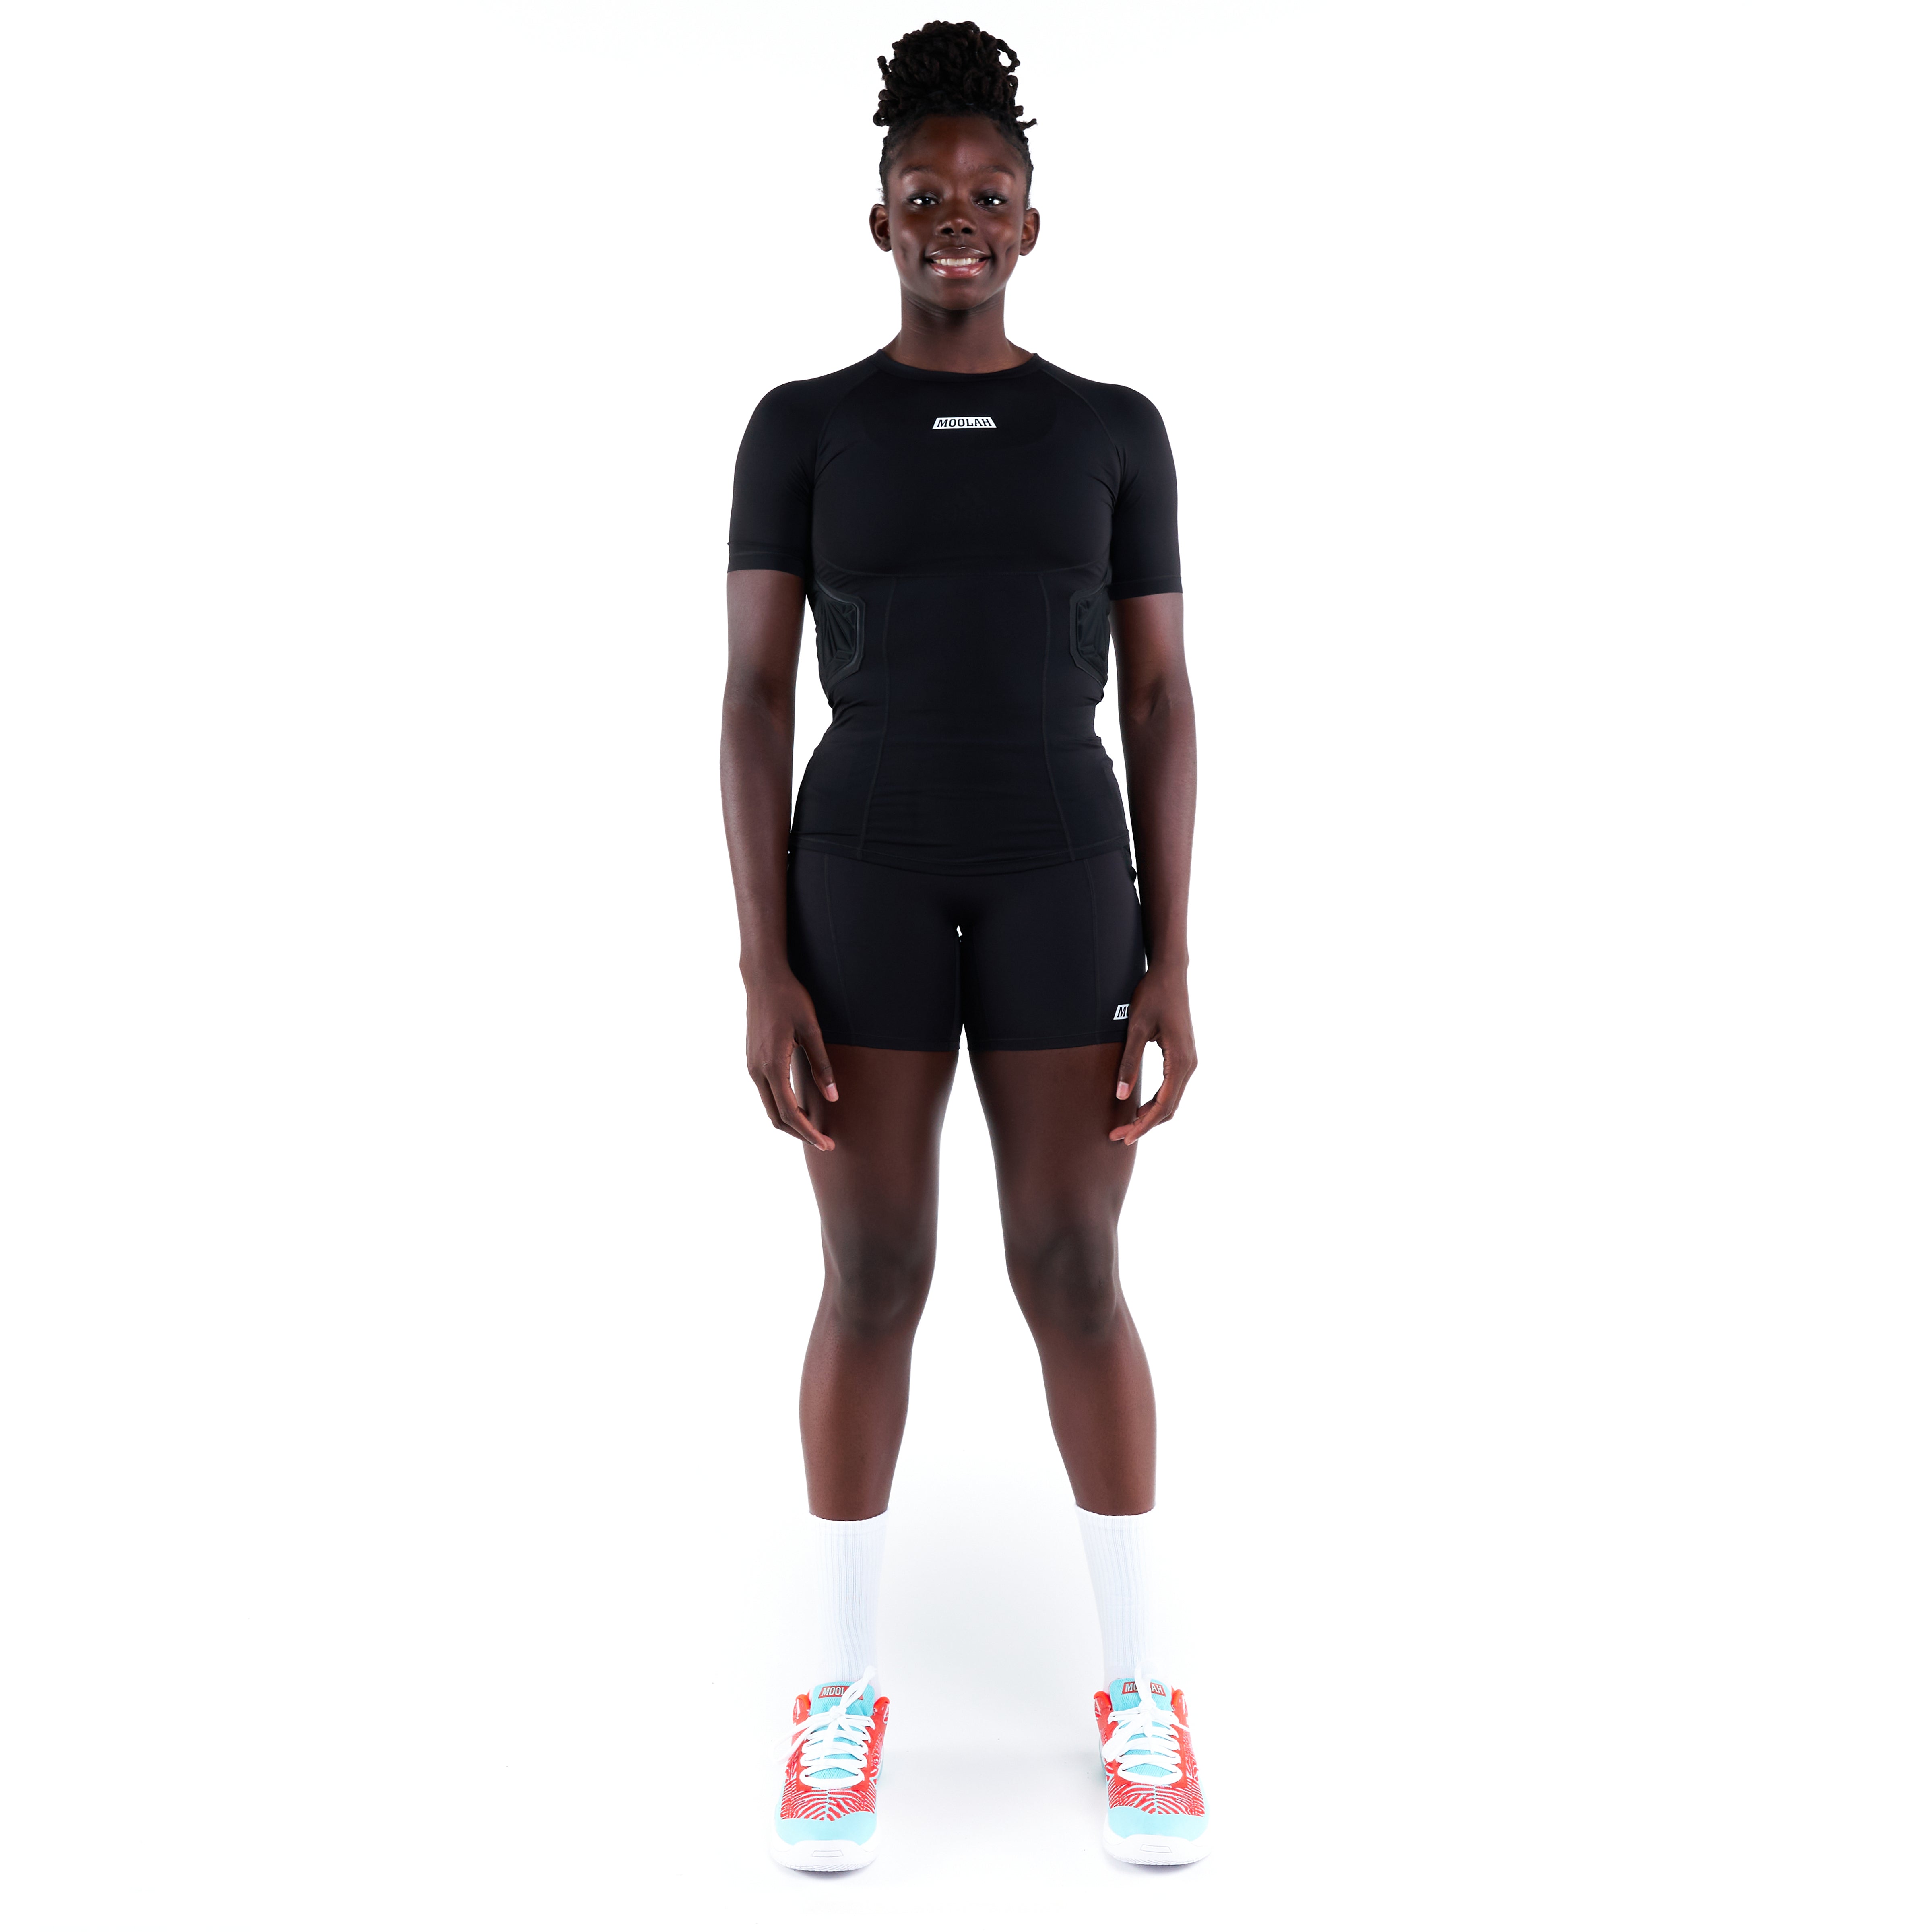 Moolah Kicks Women's Padded Compression Shorts